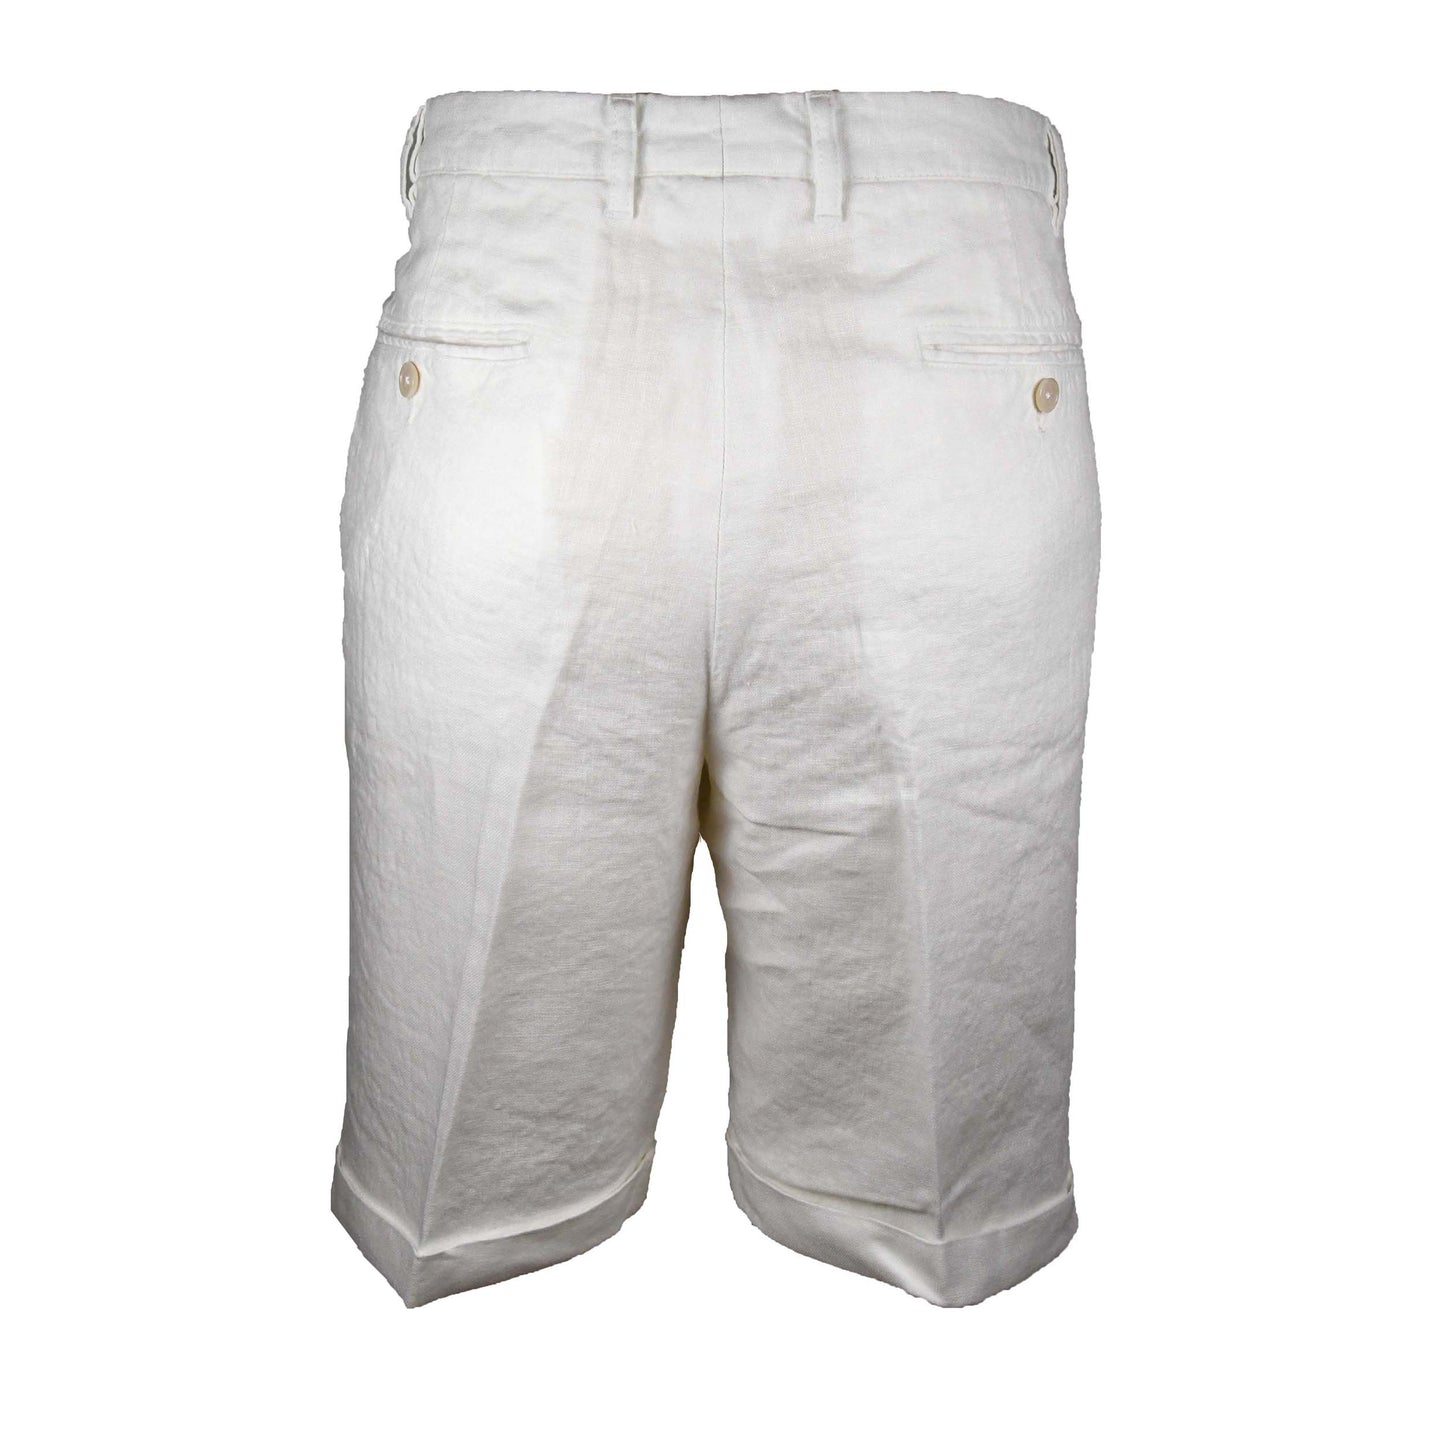 Bermuda Shorts White, Kanaljen